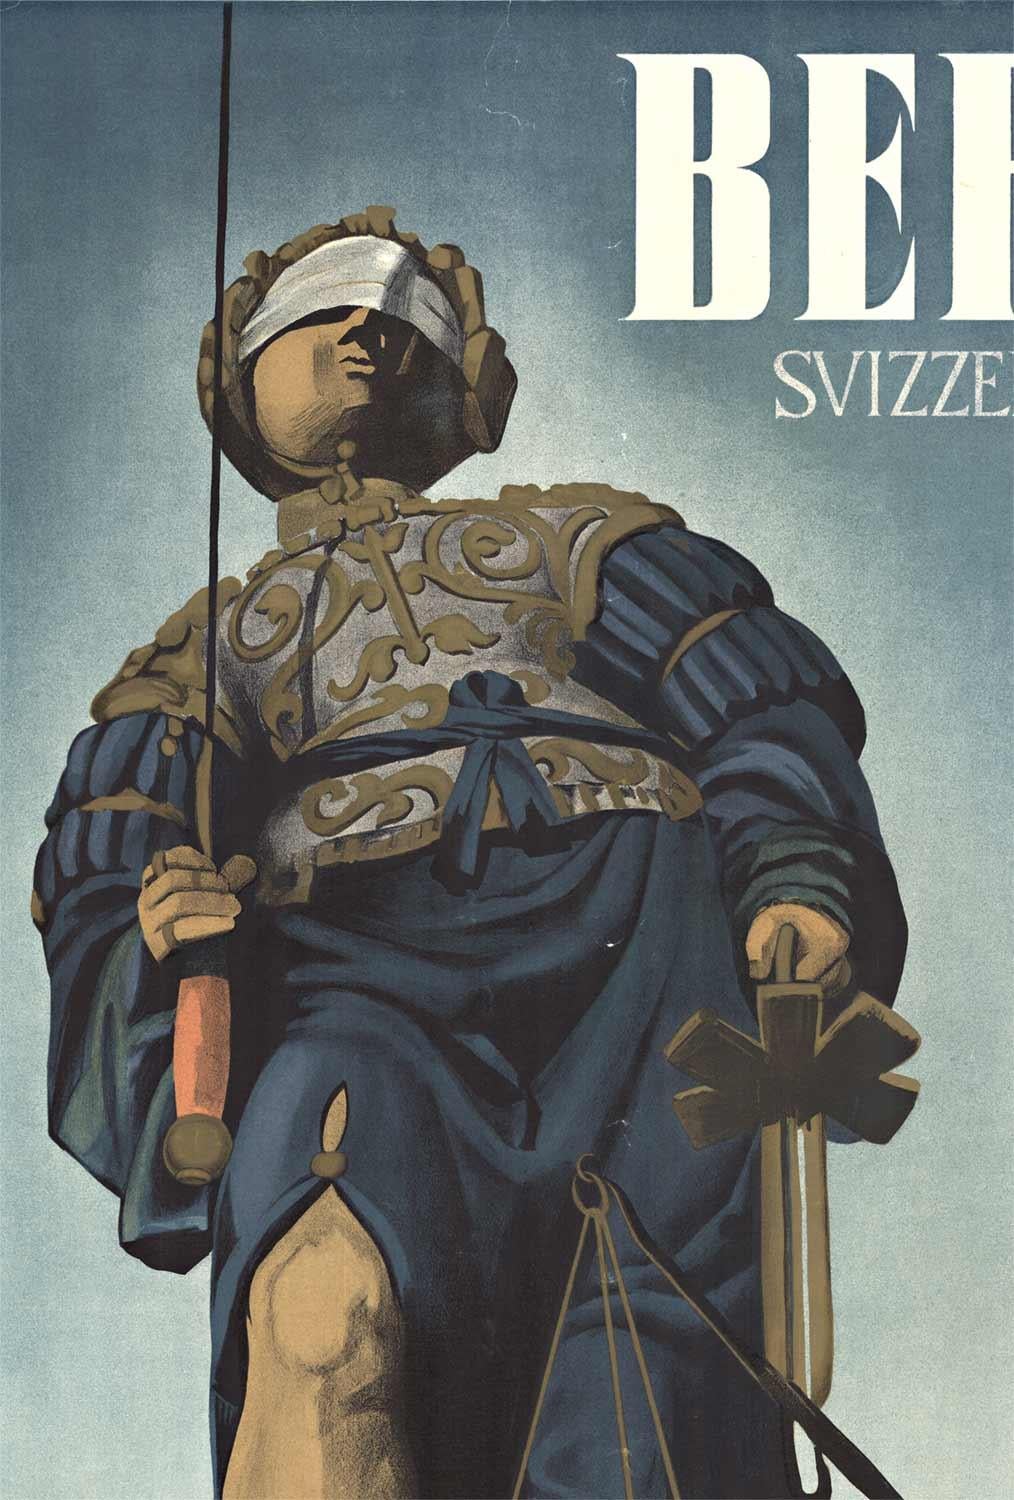 Originales Original-Vintage-Poster „Bern Svizzera“, Blind scale of justice (Grau), Still-Life Print, von Leutenegger 